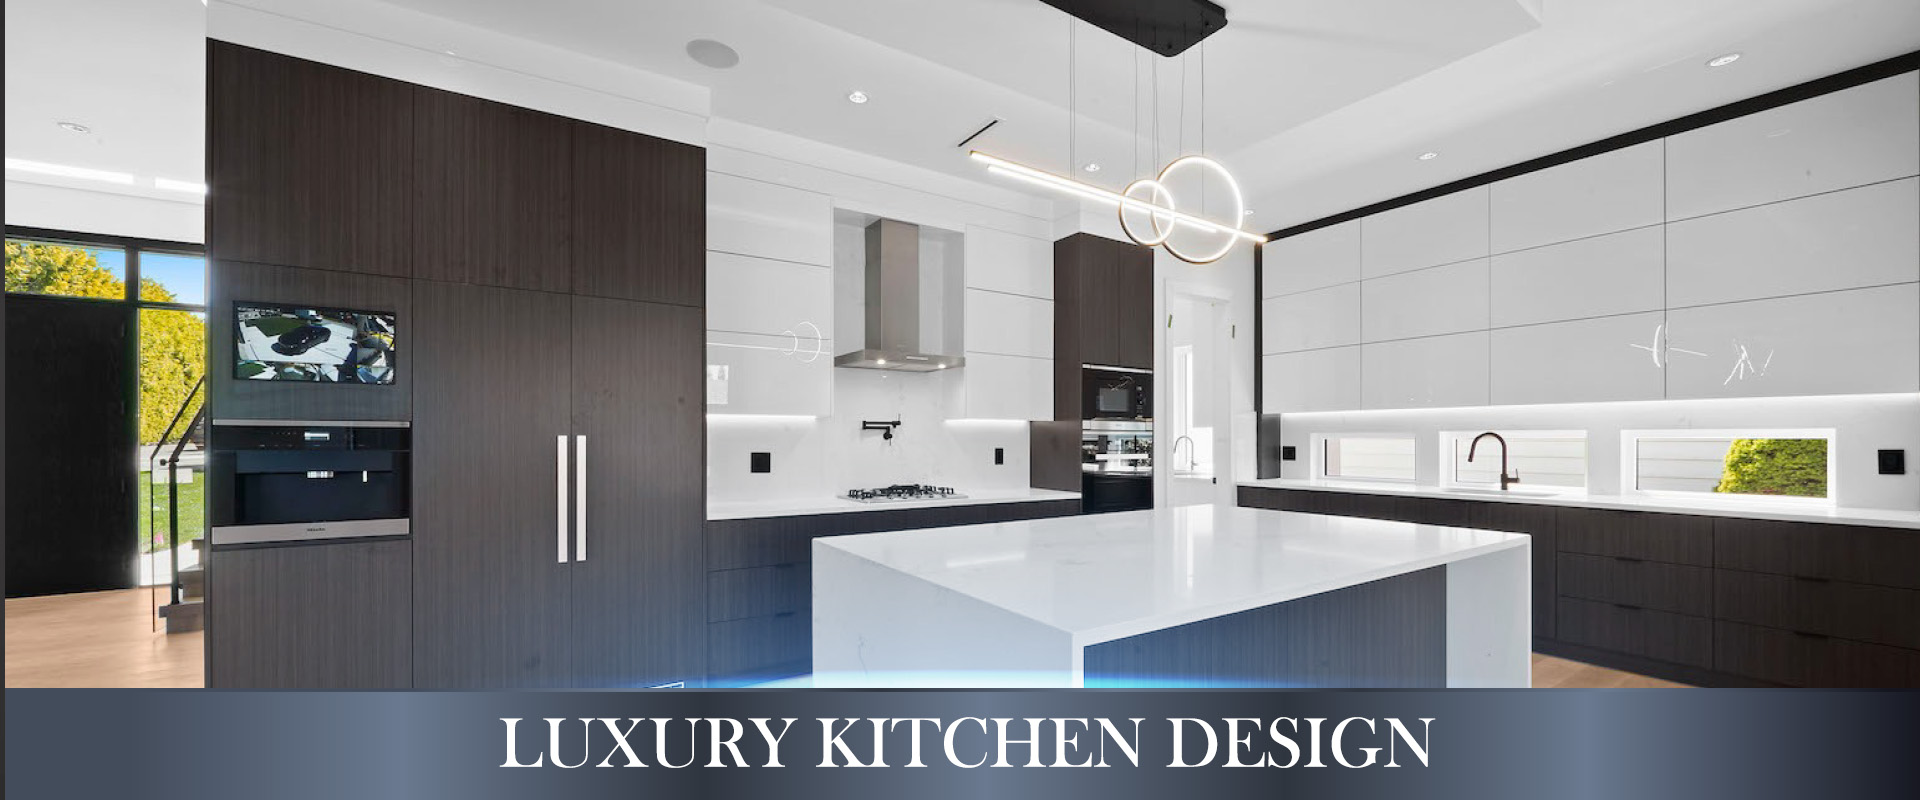 Select Kitchen Slide 7.jpg